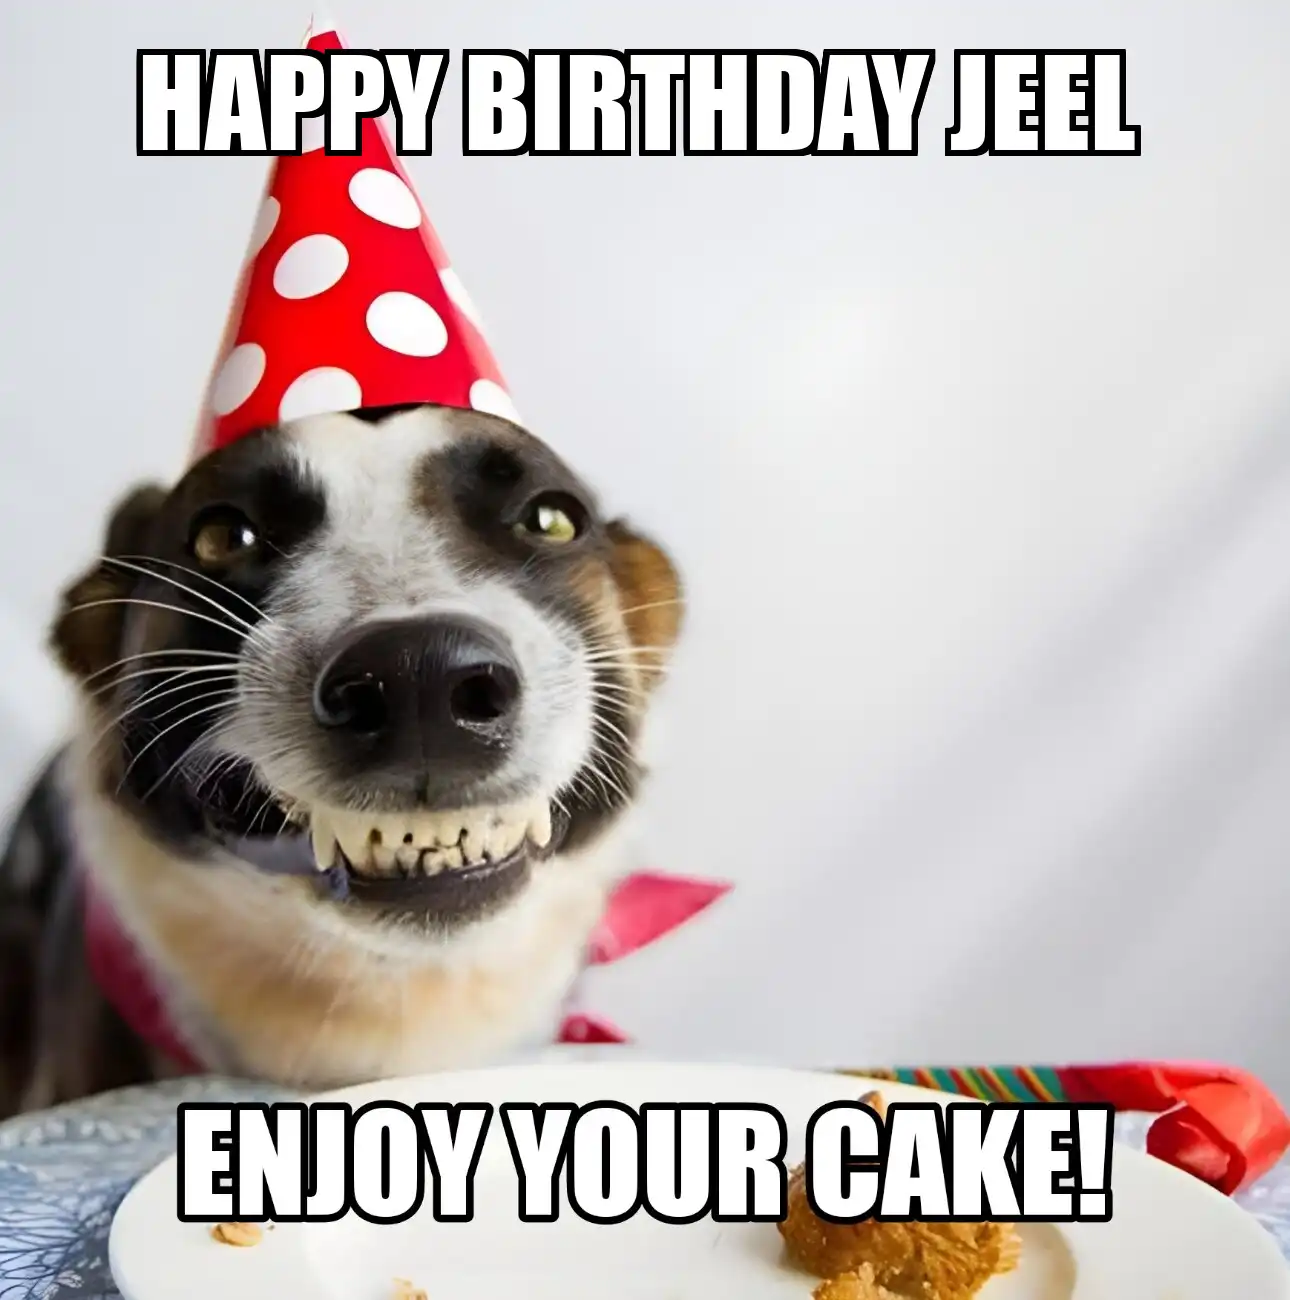 Happy Birthday Jeel Enjoy Your Cake Dog Meme